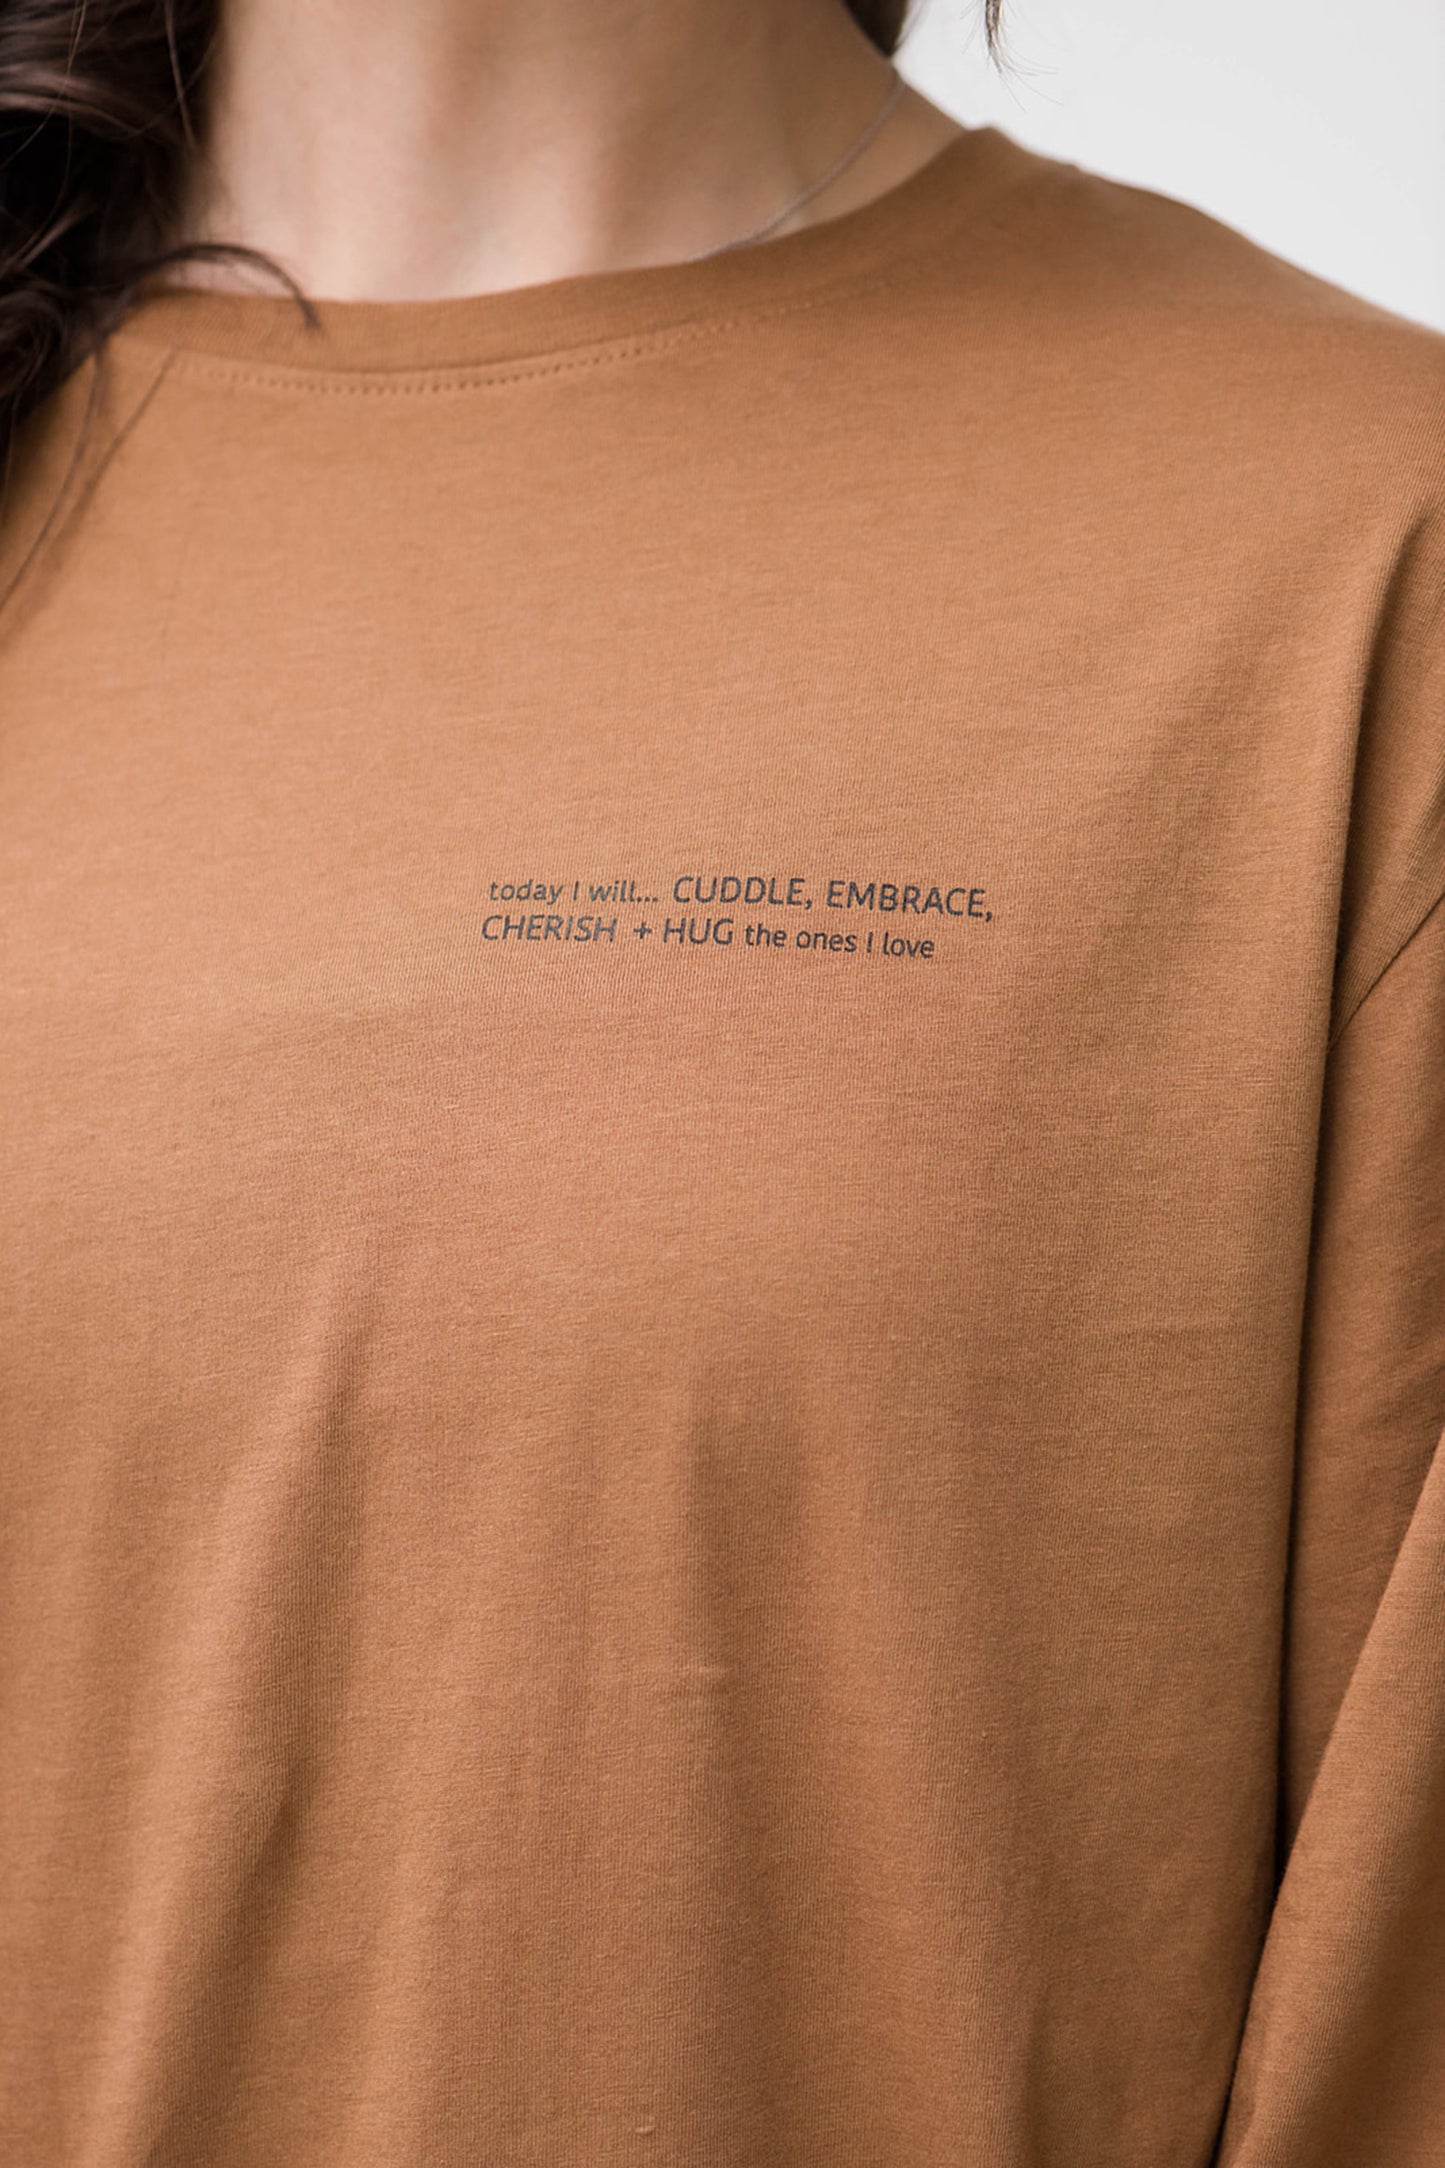 Marin Long Sleeve T-Shirt |Burnt Caramel